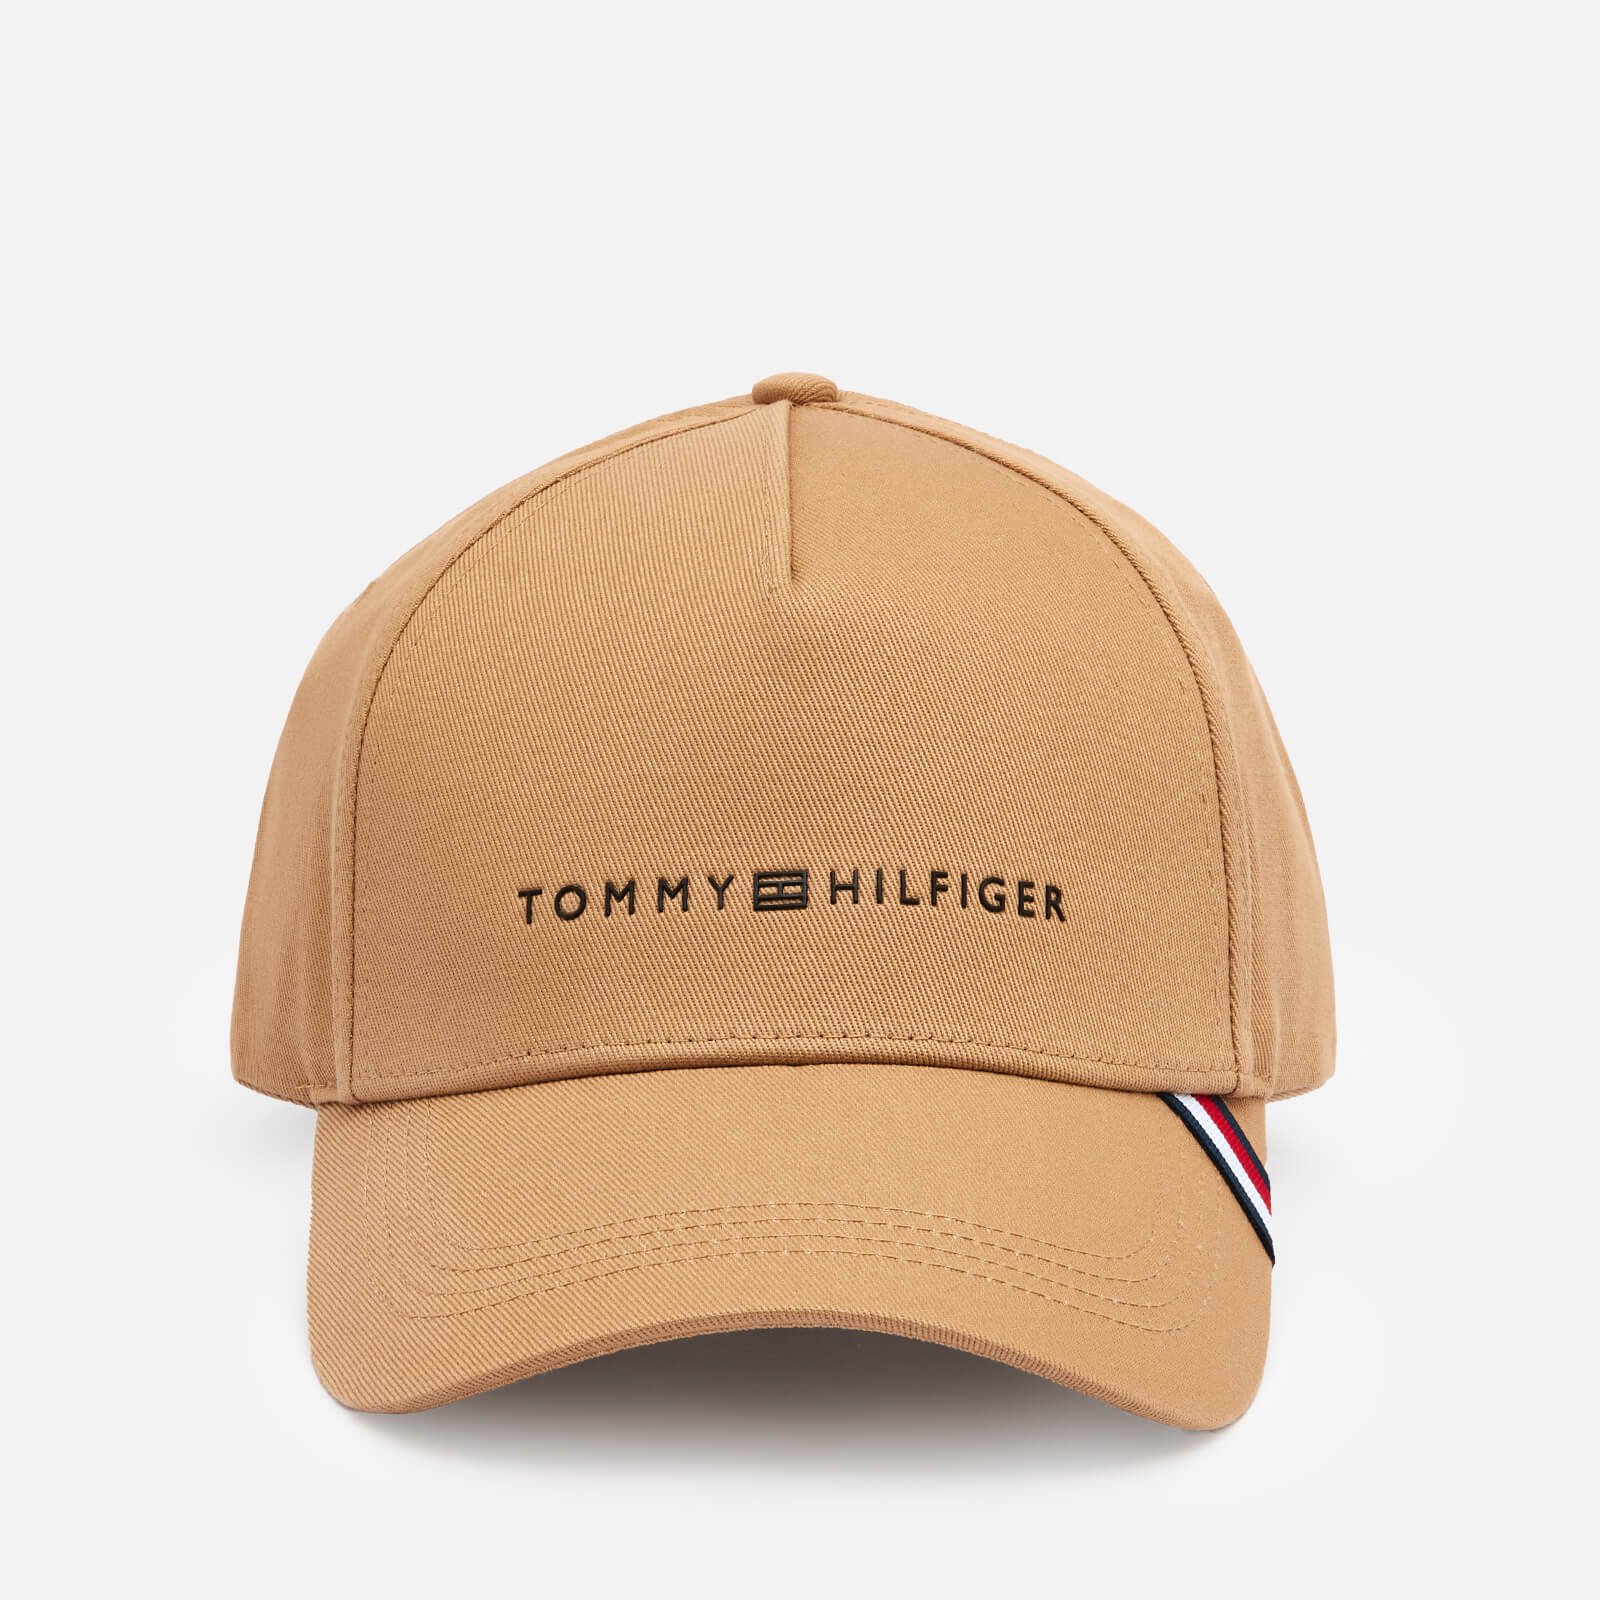 Tommy Hilfiger Men's Uptown Cap - Classic Khaki